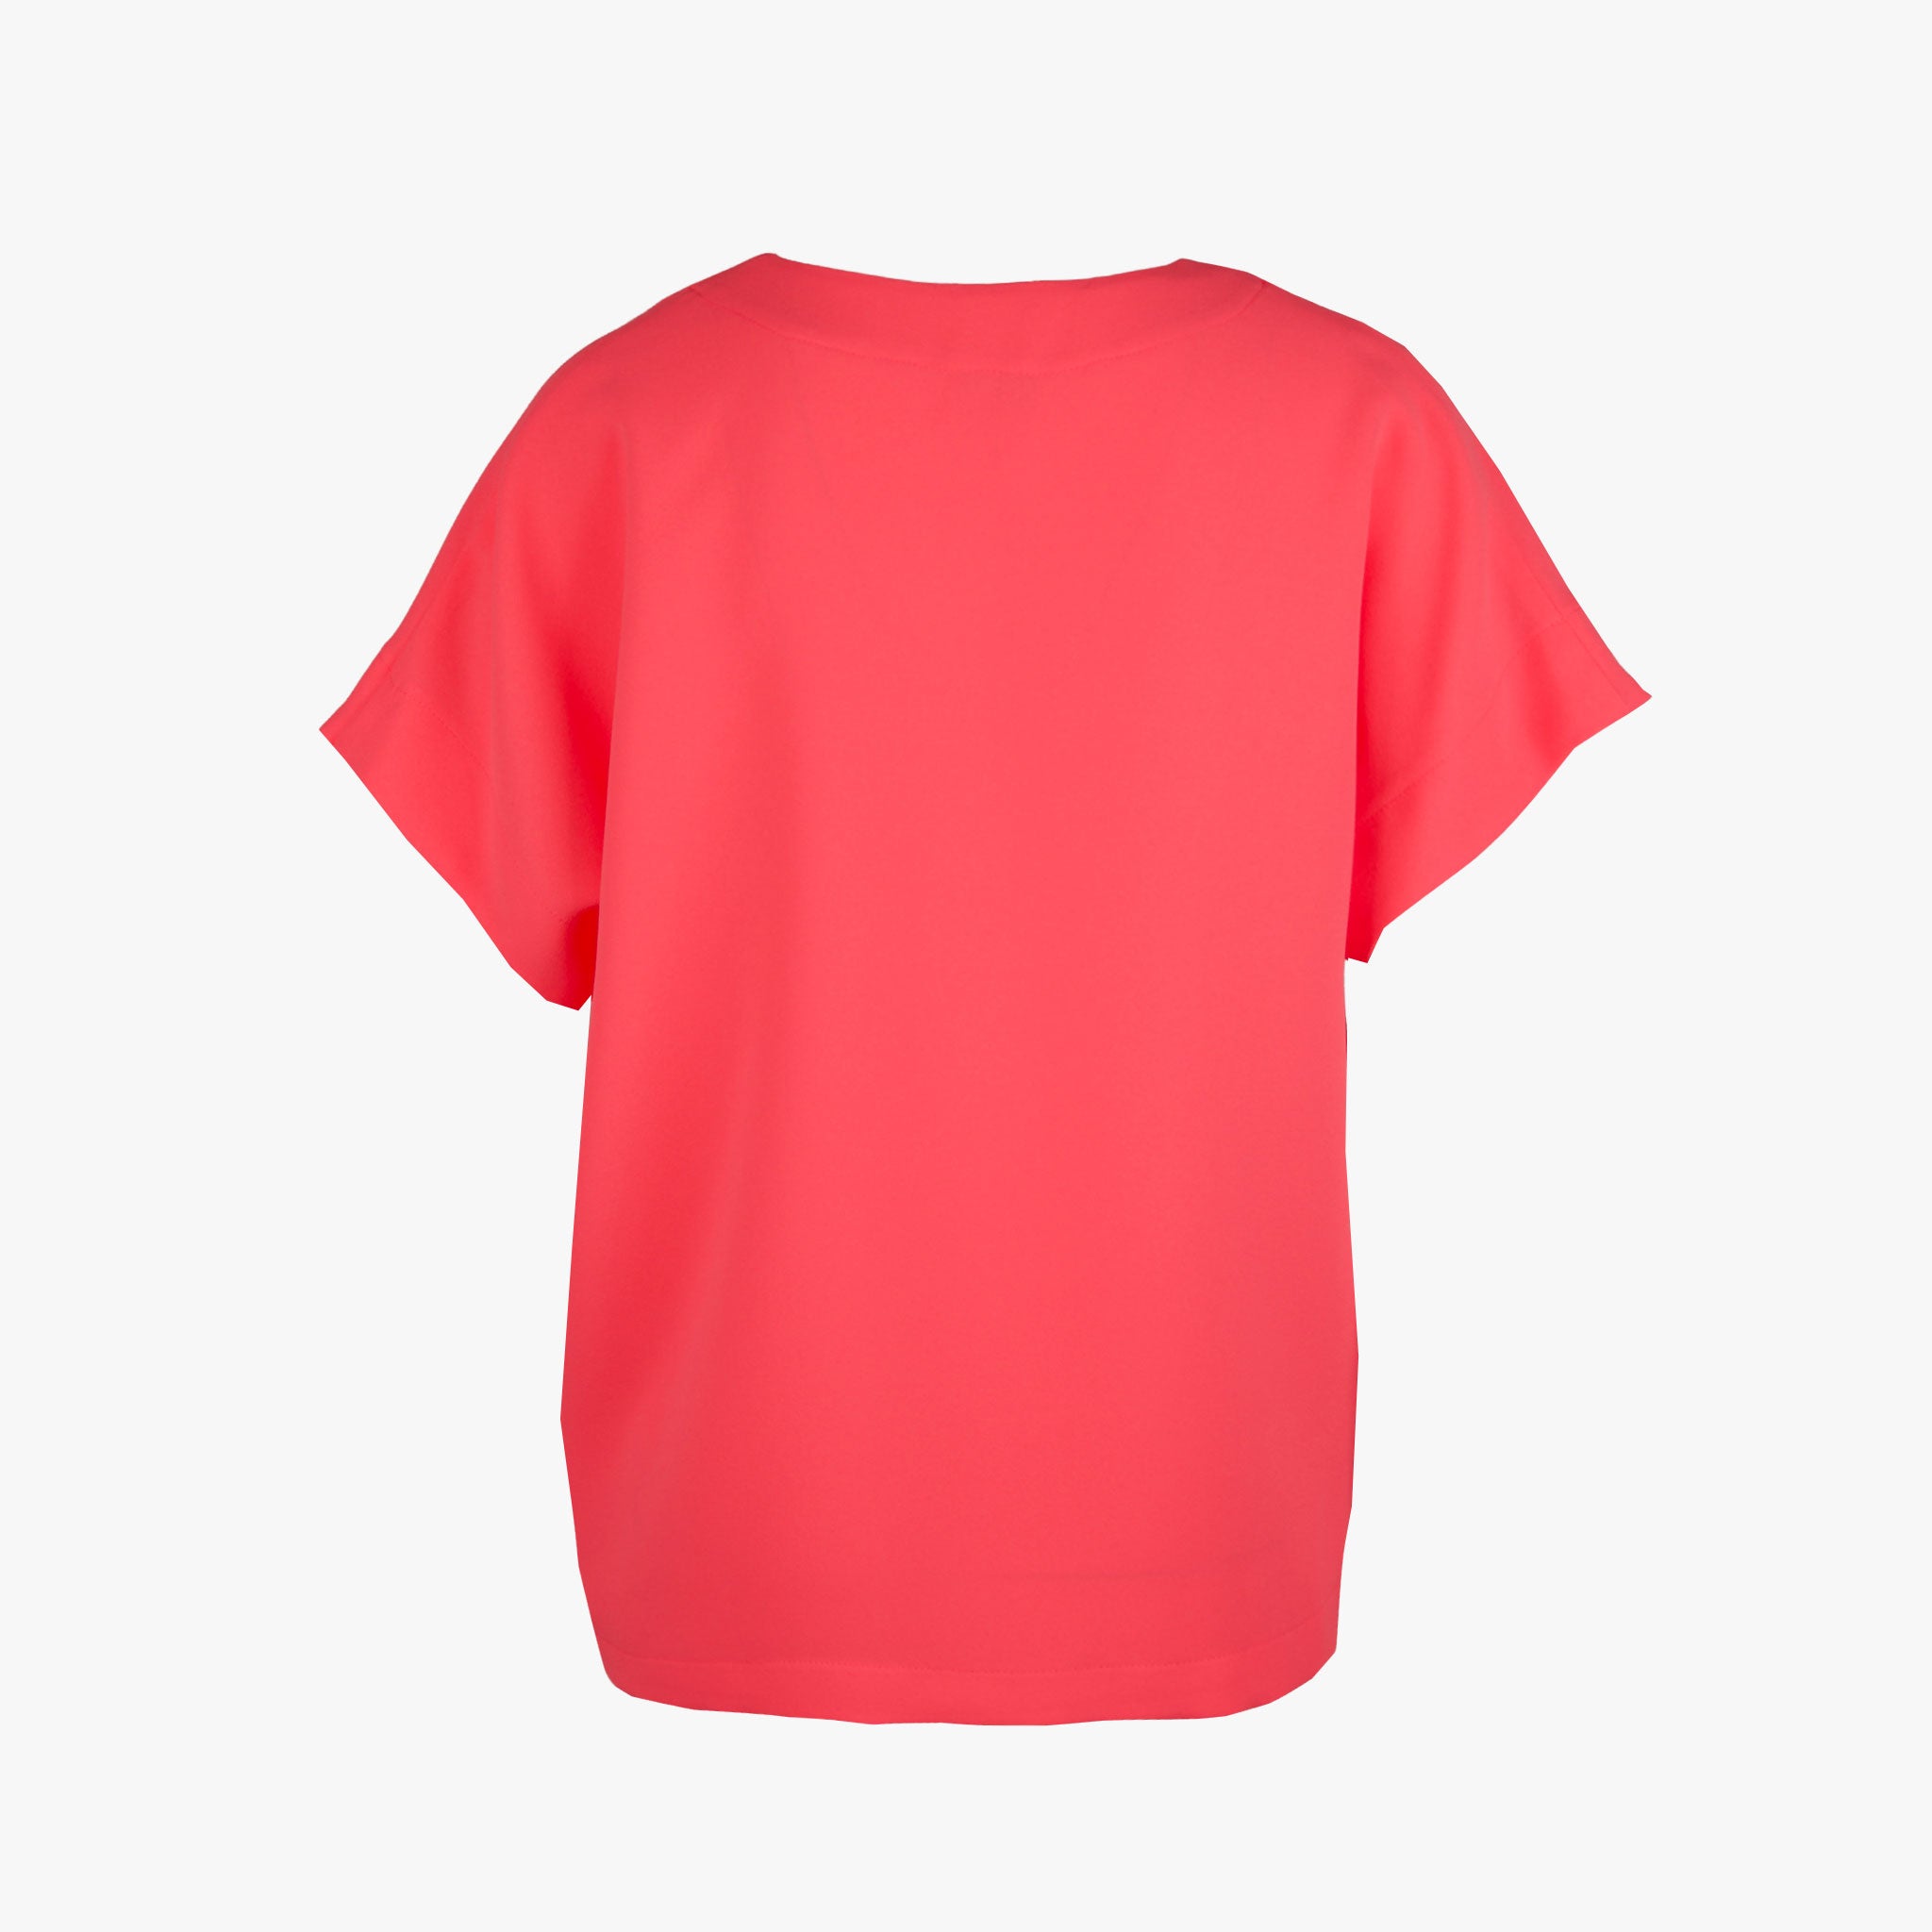 Toupy Shirt Bolovie | neonpink